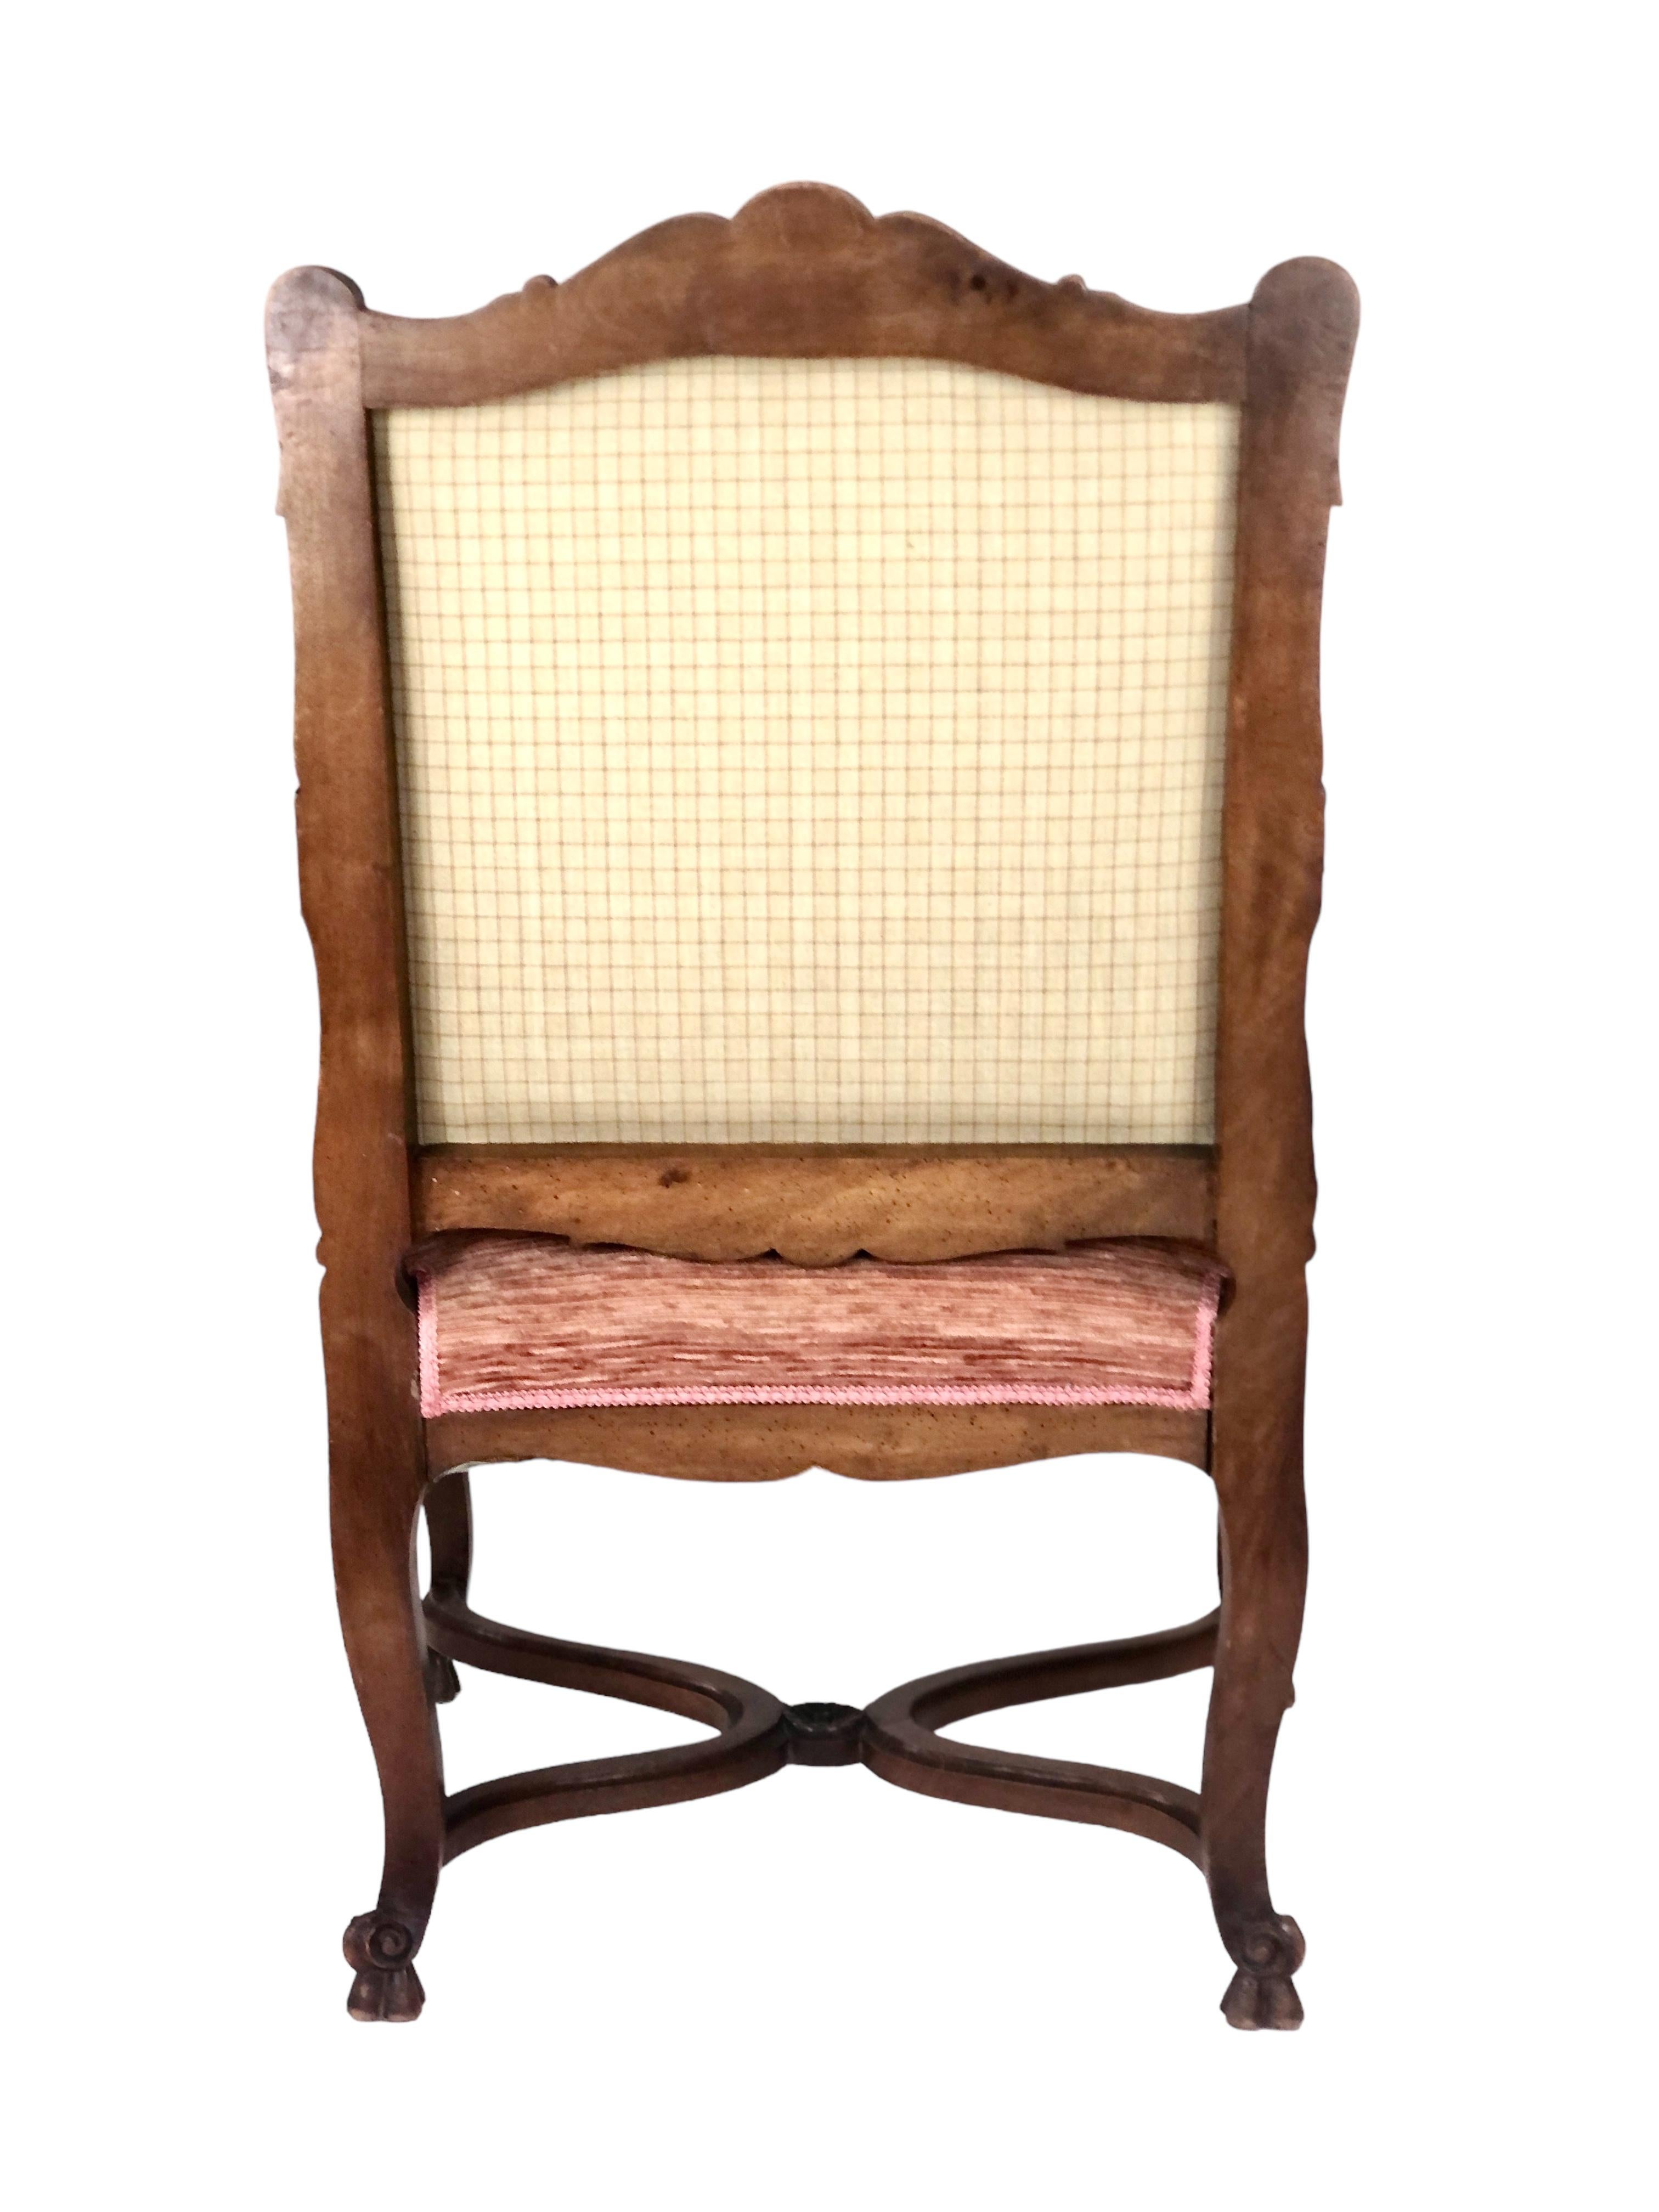 19th Century Pair of Walnut Regency Chairs Called “Fauteuils à La Reine” For Sale 1